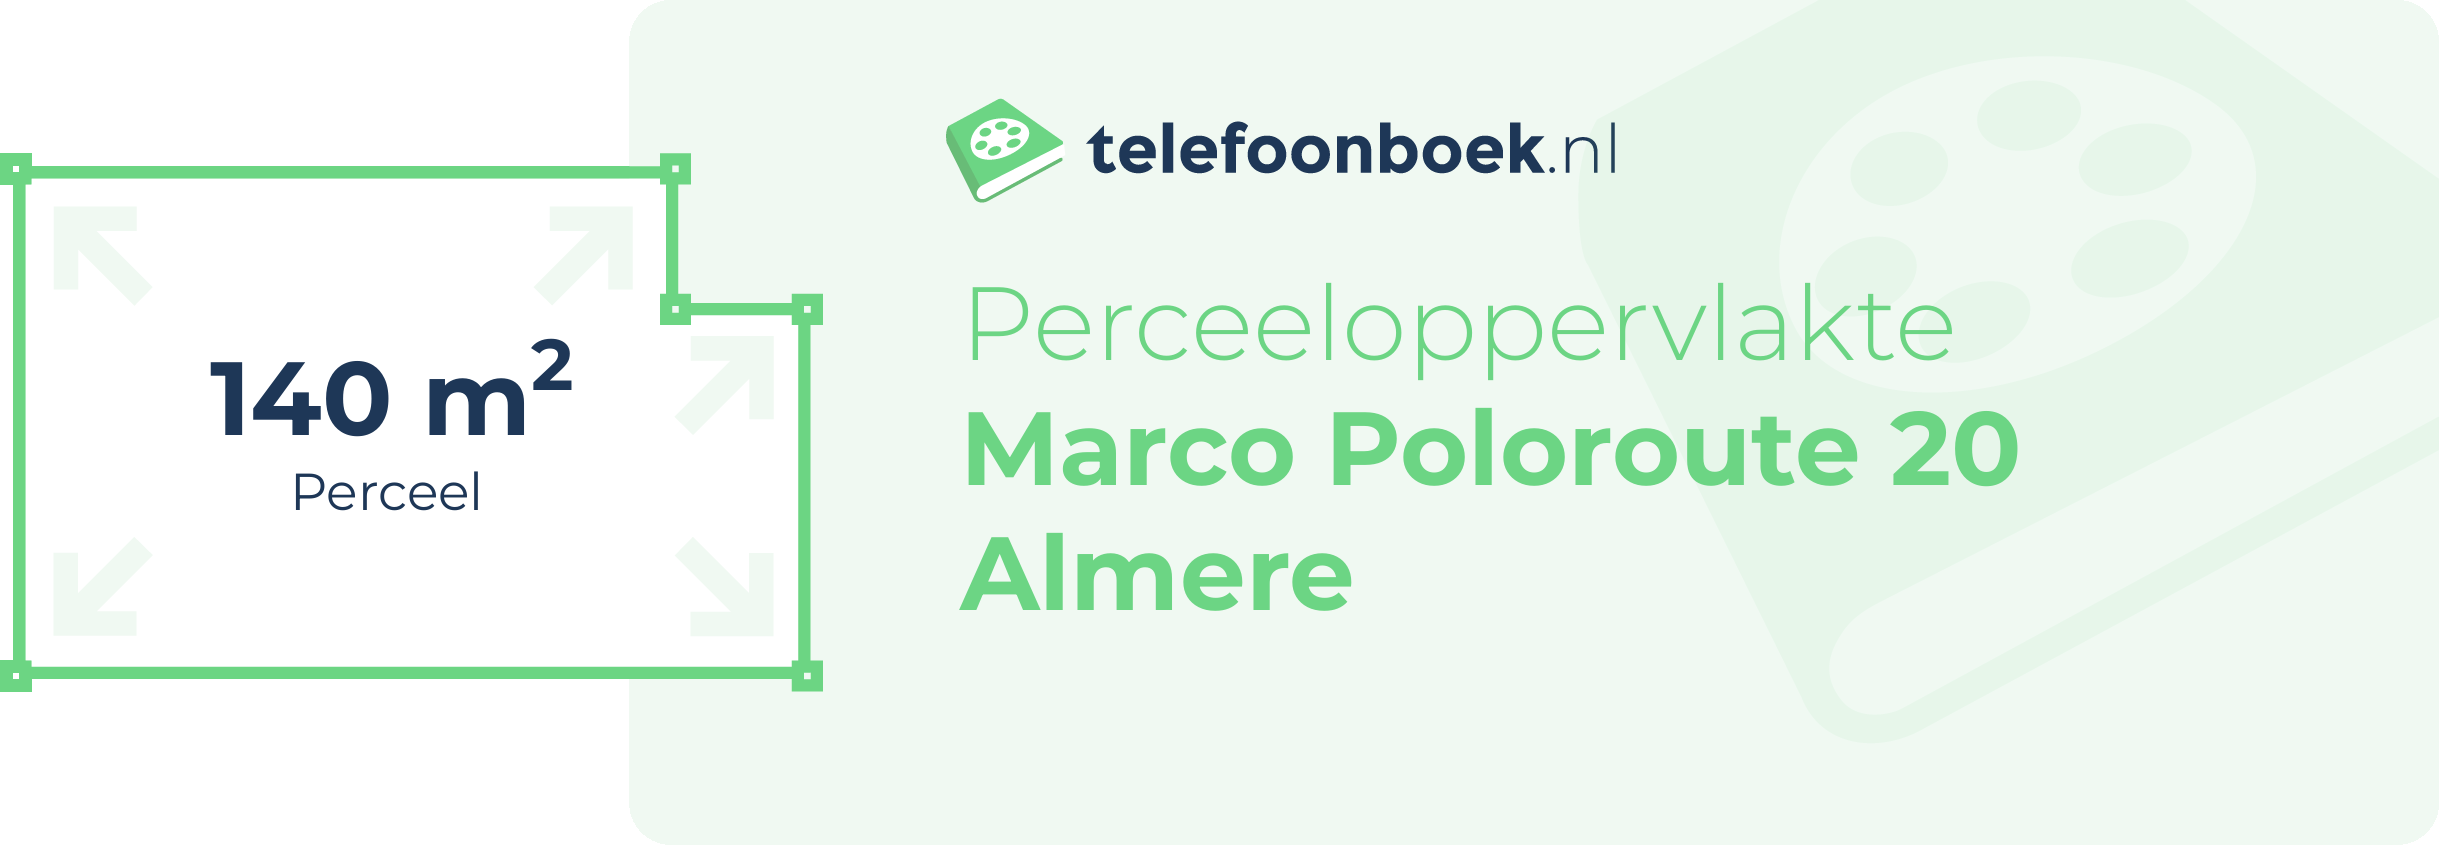 Perceeloppervlakte Marco Poloroute 20 Almere